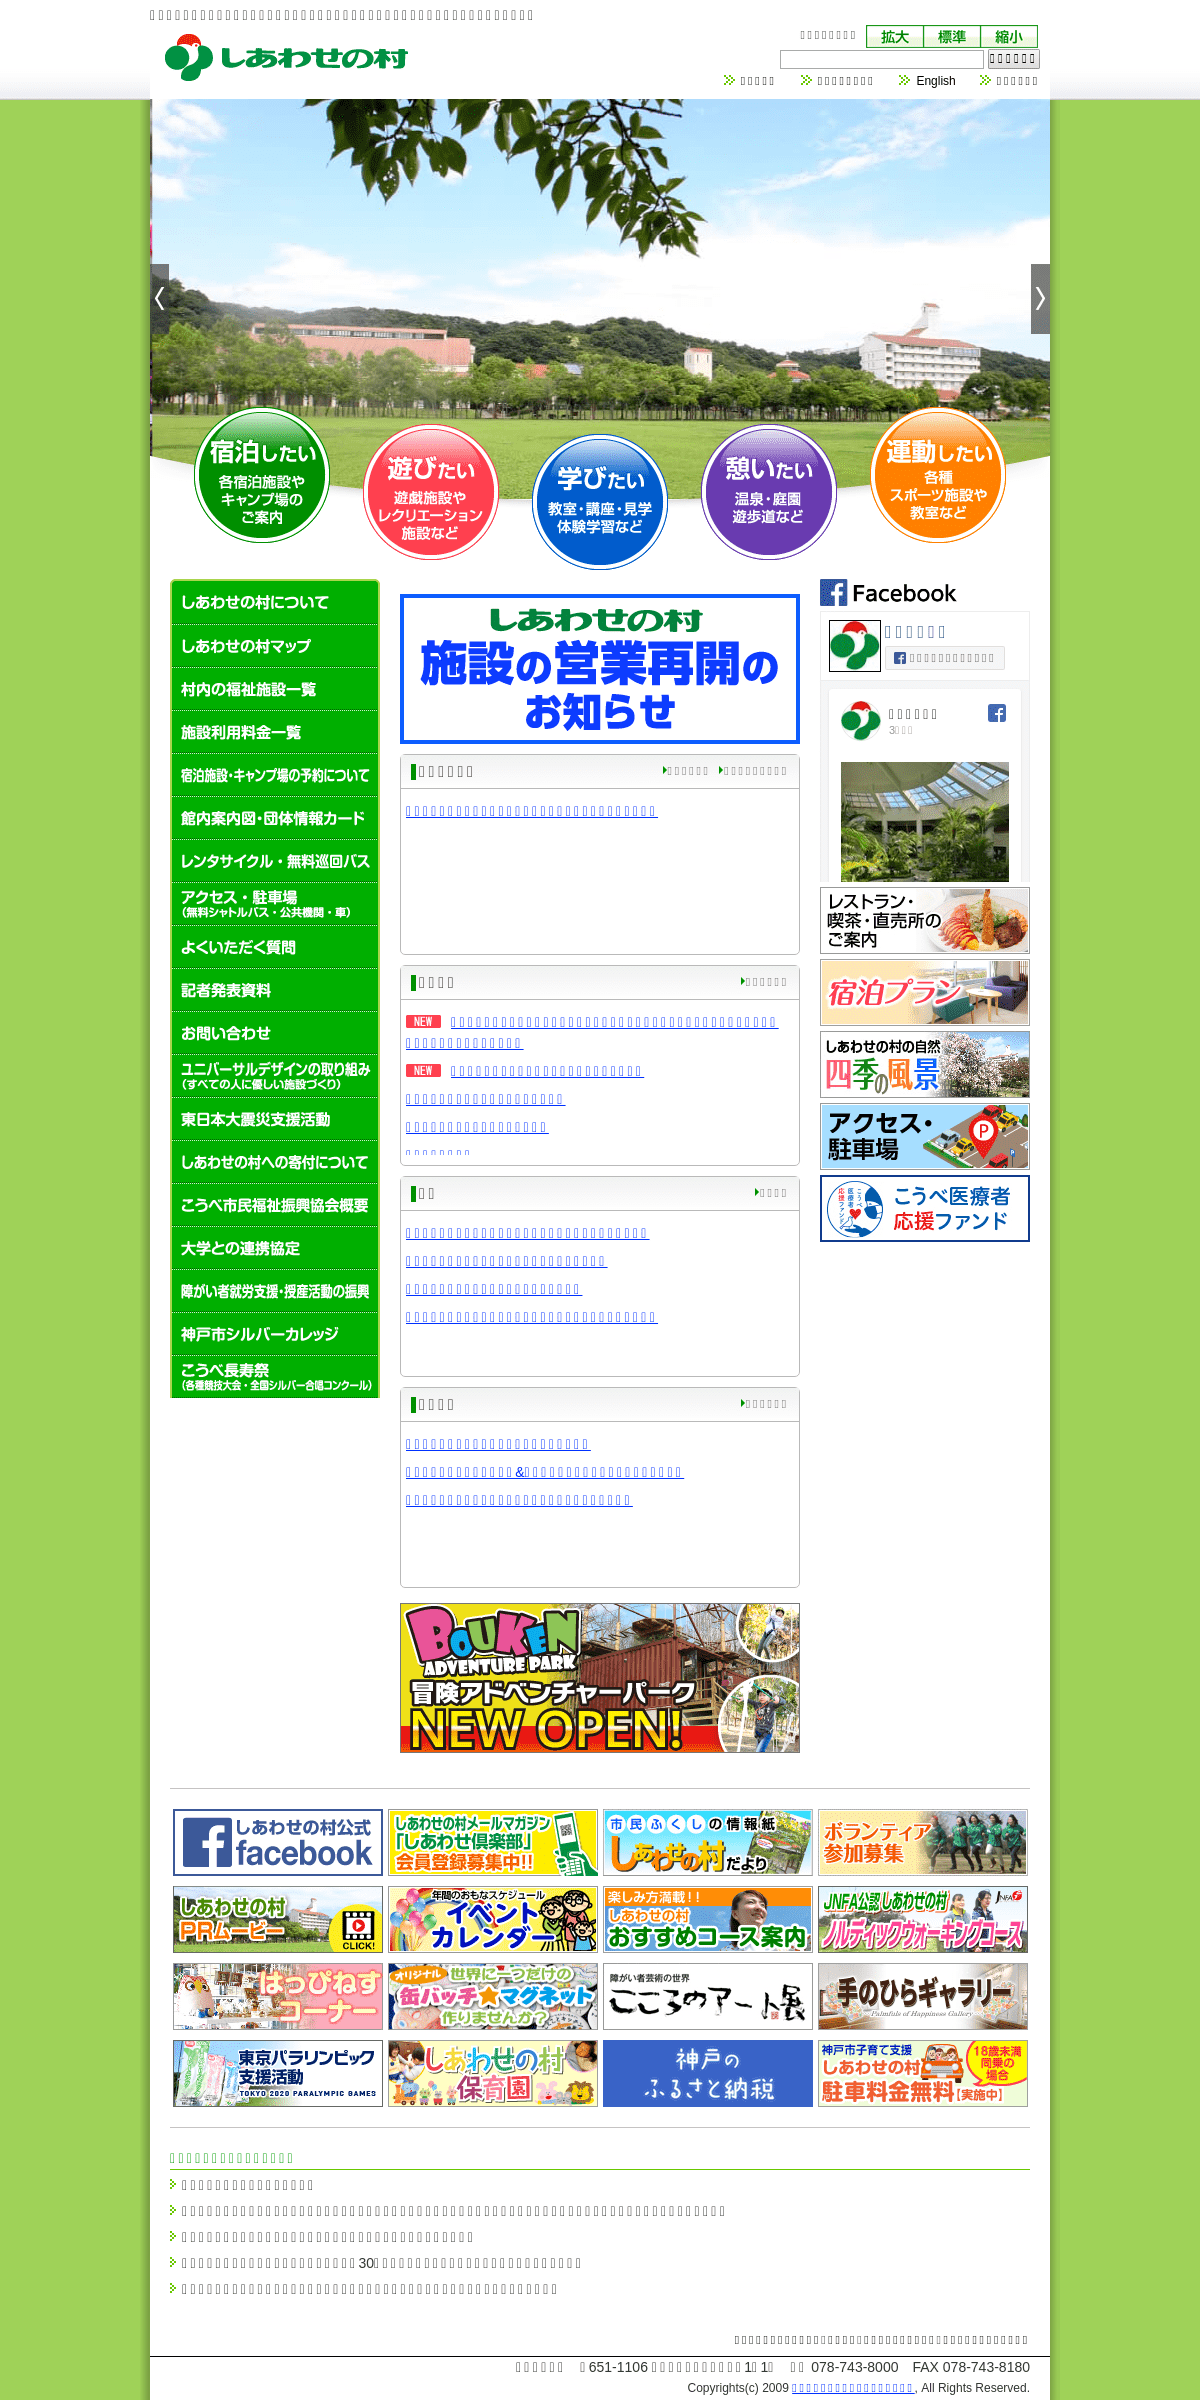 A complete backup of shiawasenomura.org